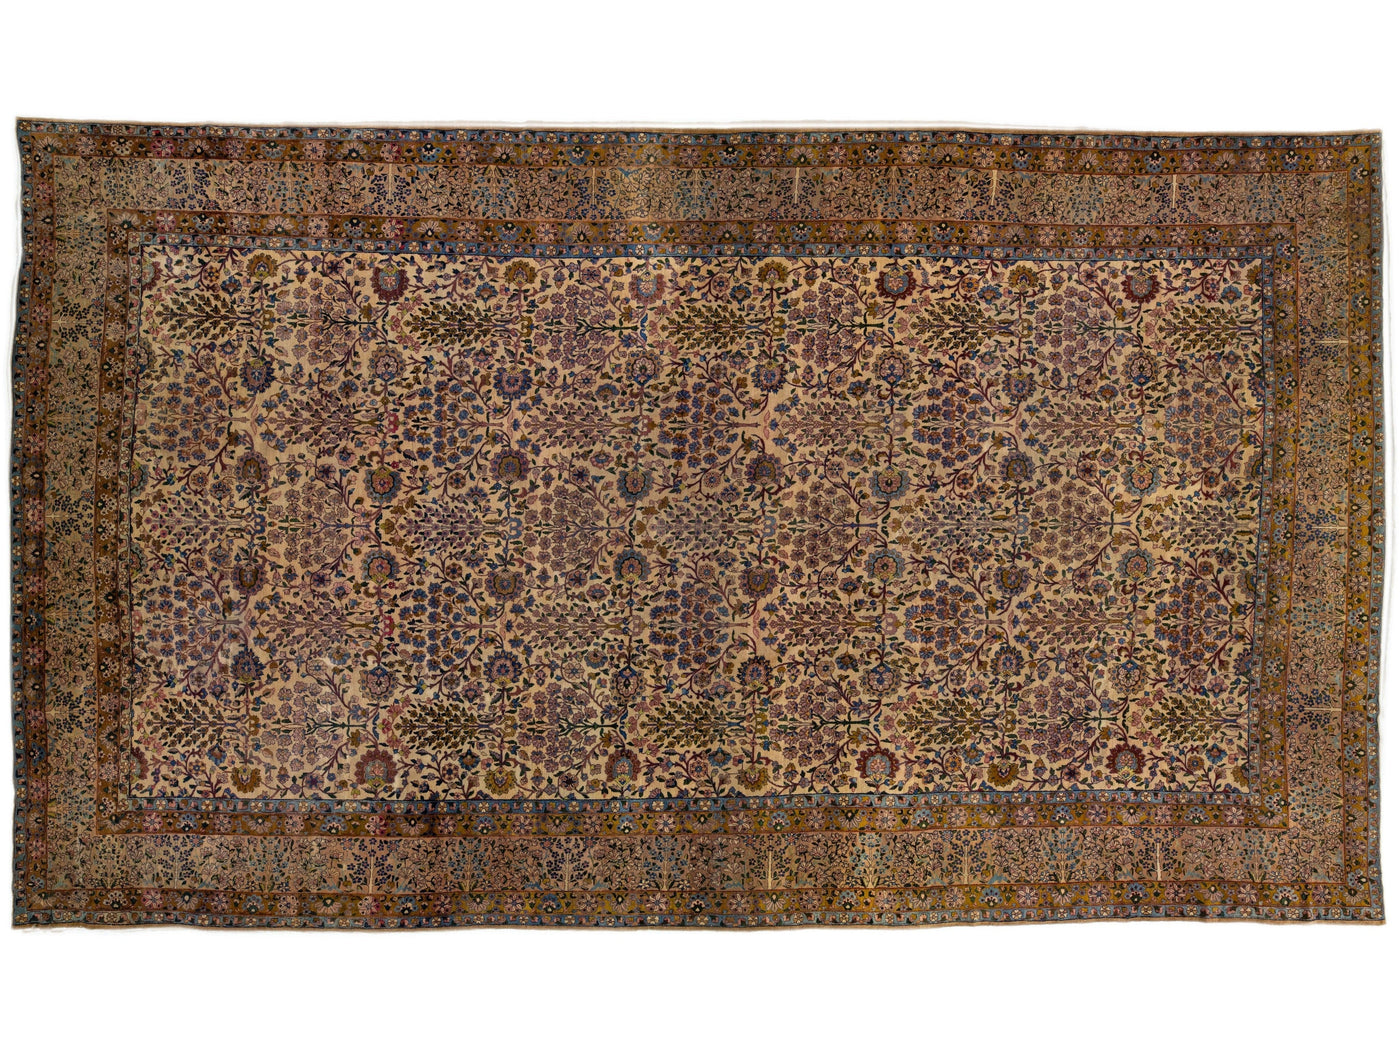 Tan Antique Kerman Handmade Allover Motif Persian Wool Rug